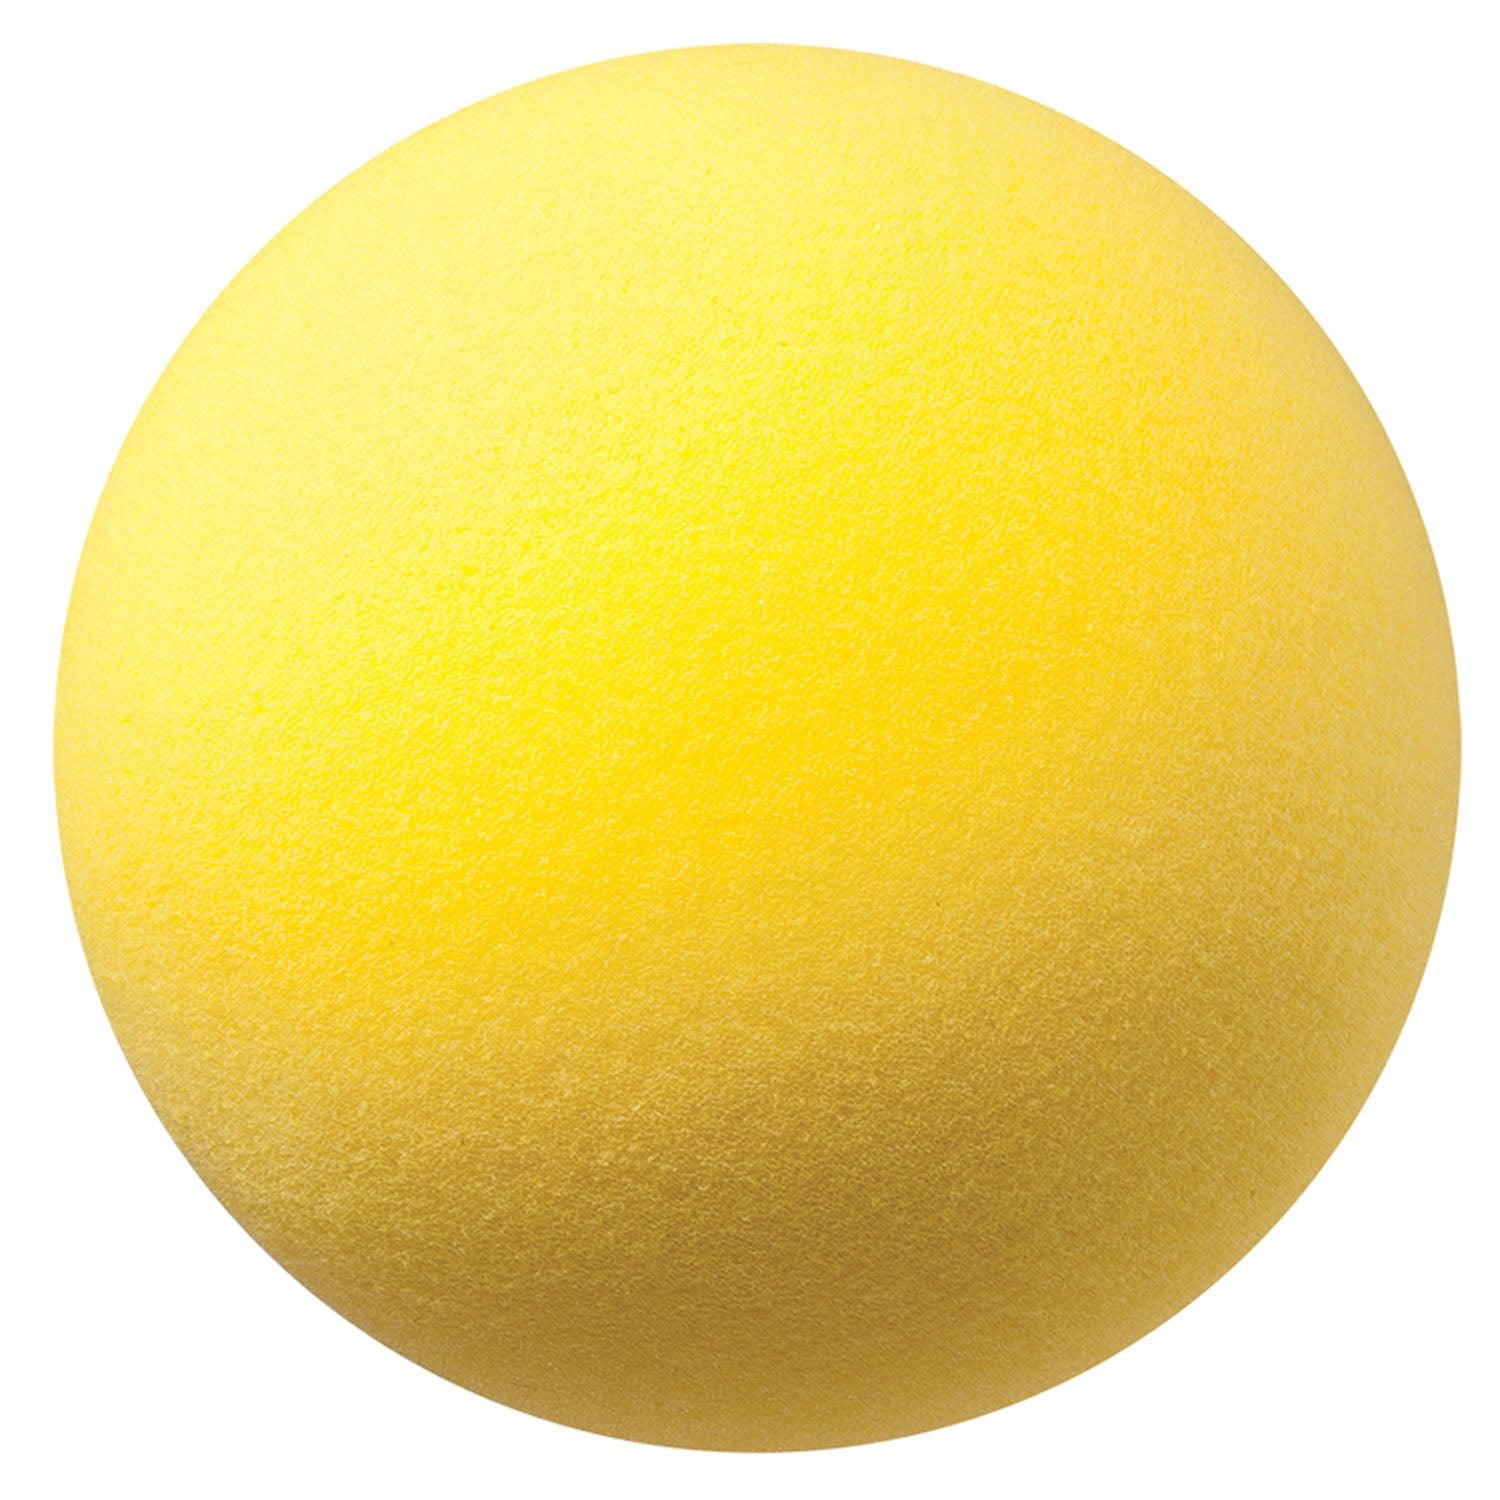 Uncoated Regular Density Foam Ball, 8-1/2", Yellow - Loomini